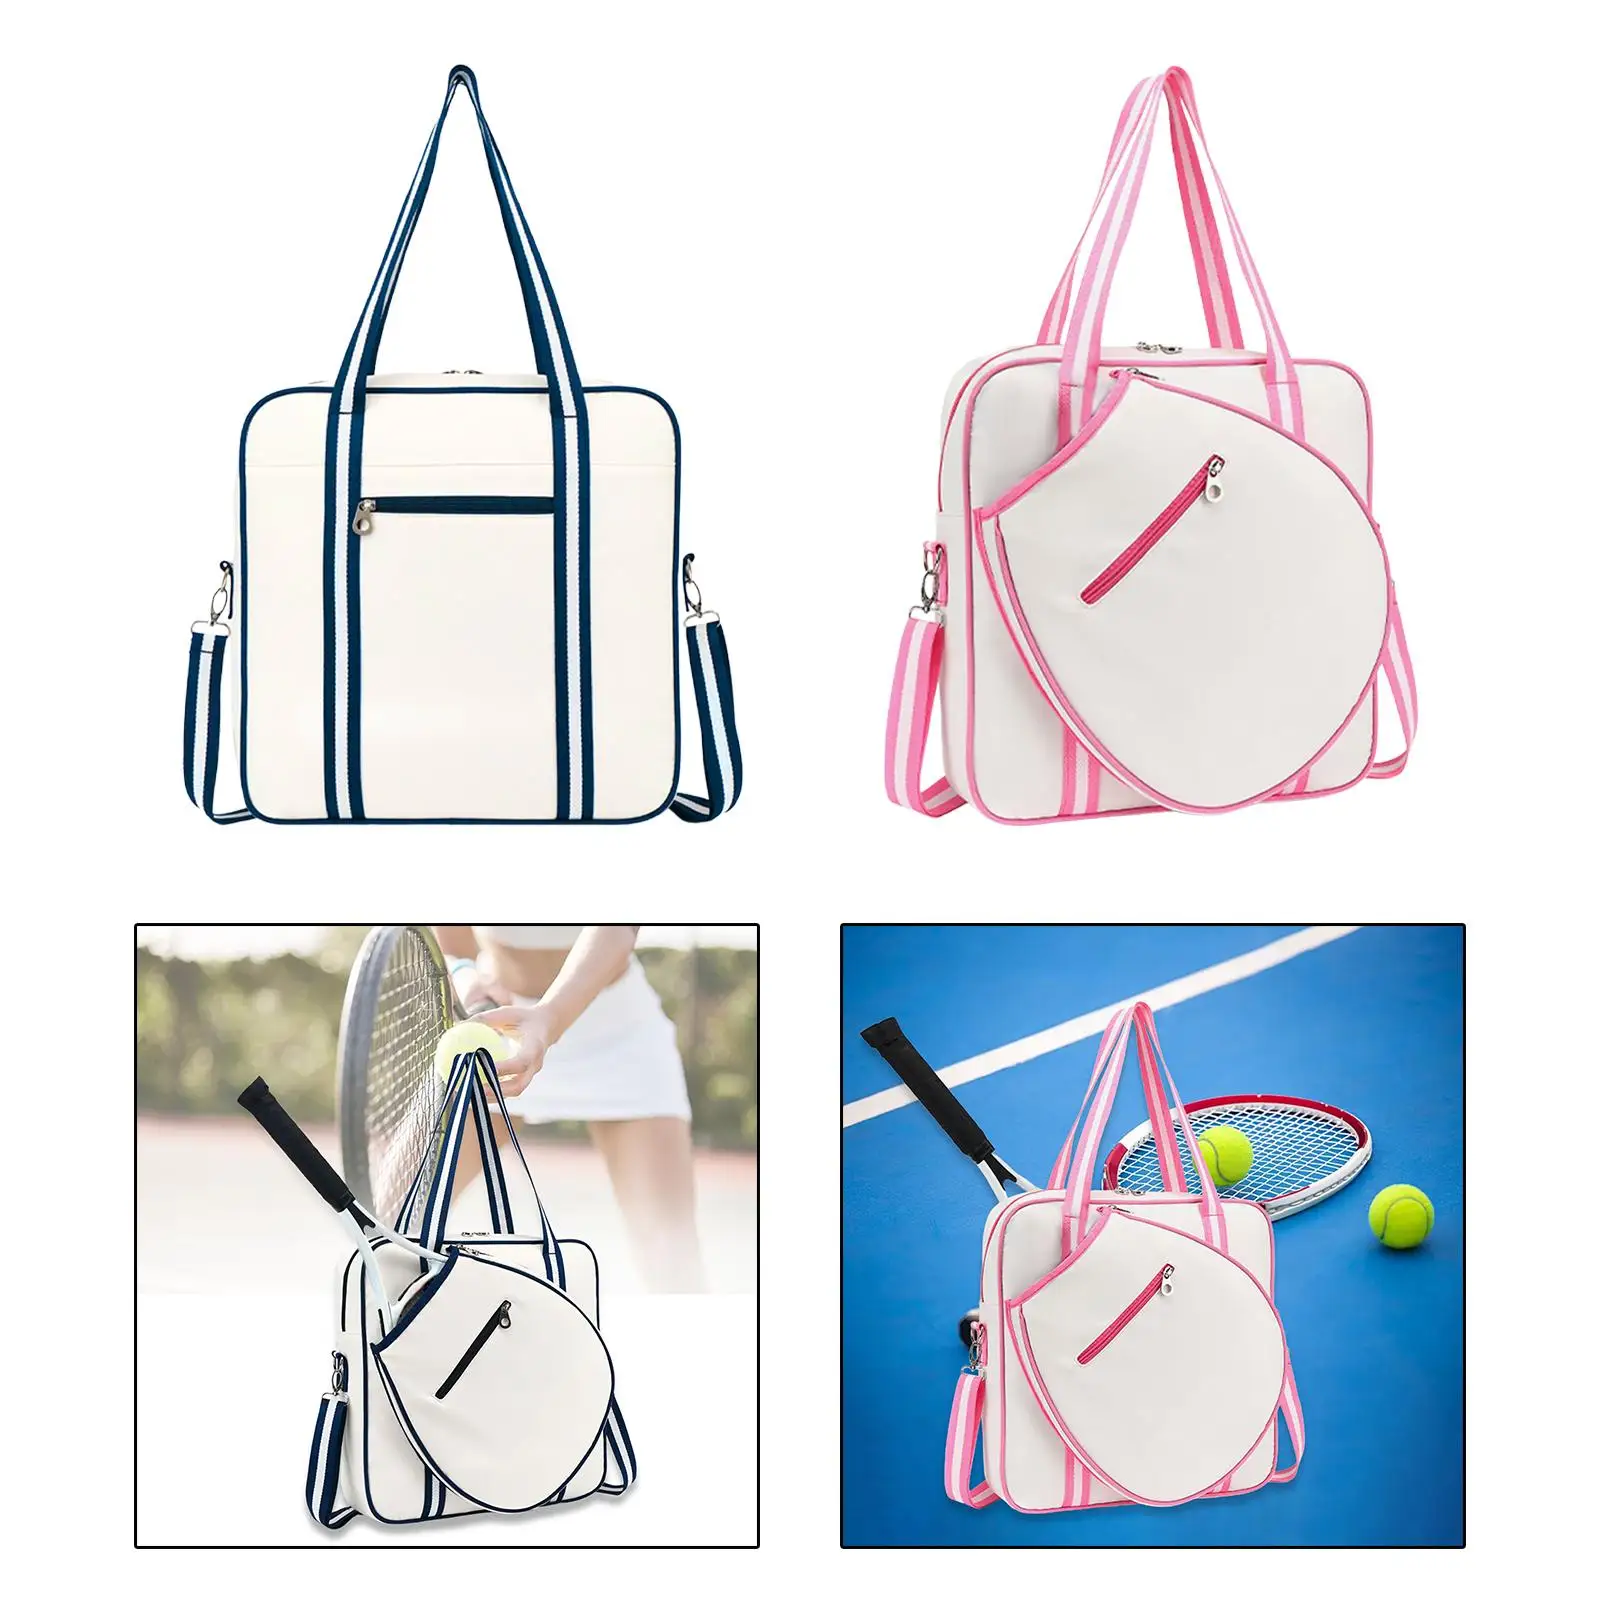 Tennis Racket Shoulder Bag Tennis Tote Bag Adjustable Long Strap Sturdy Water Resistant Large Capacity for Outdoor Activities